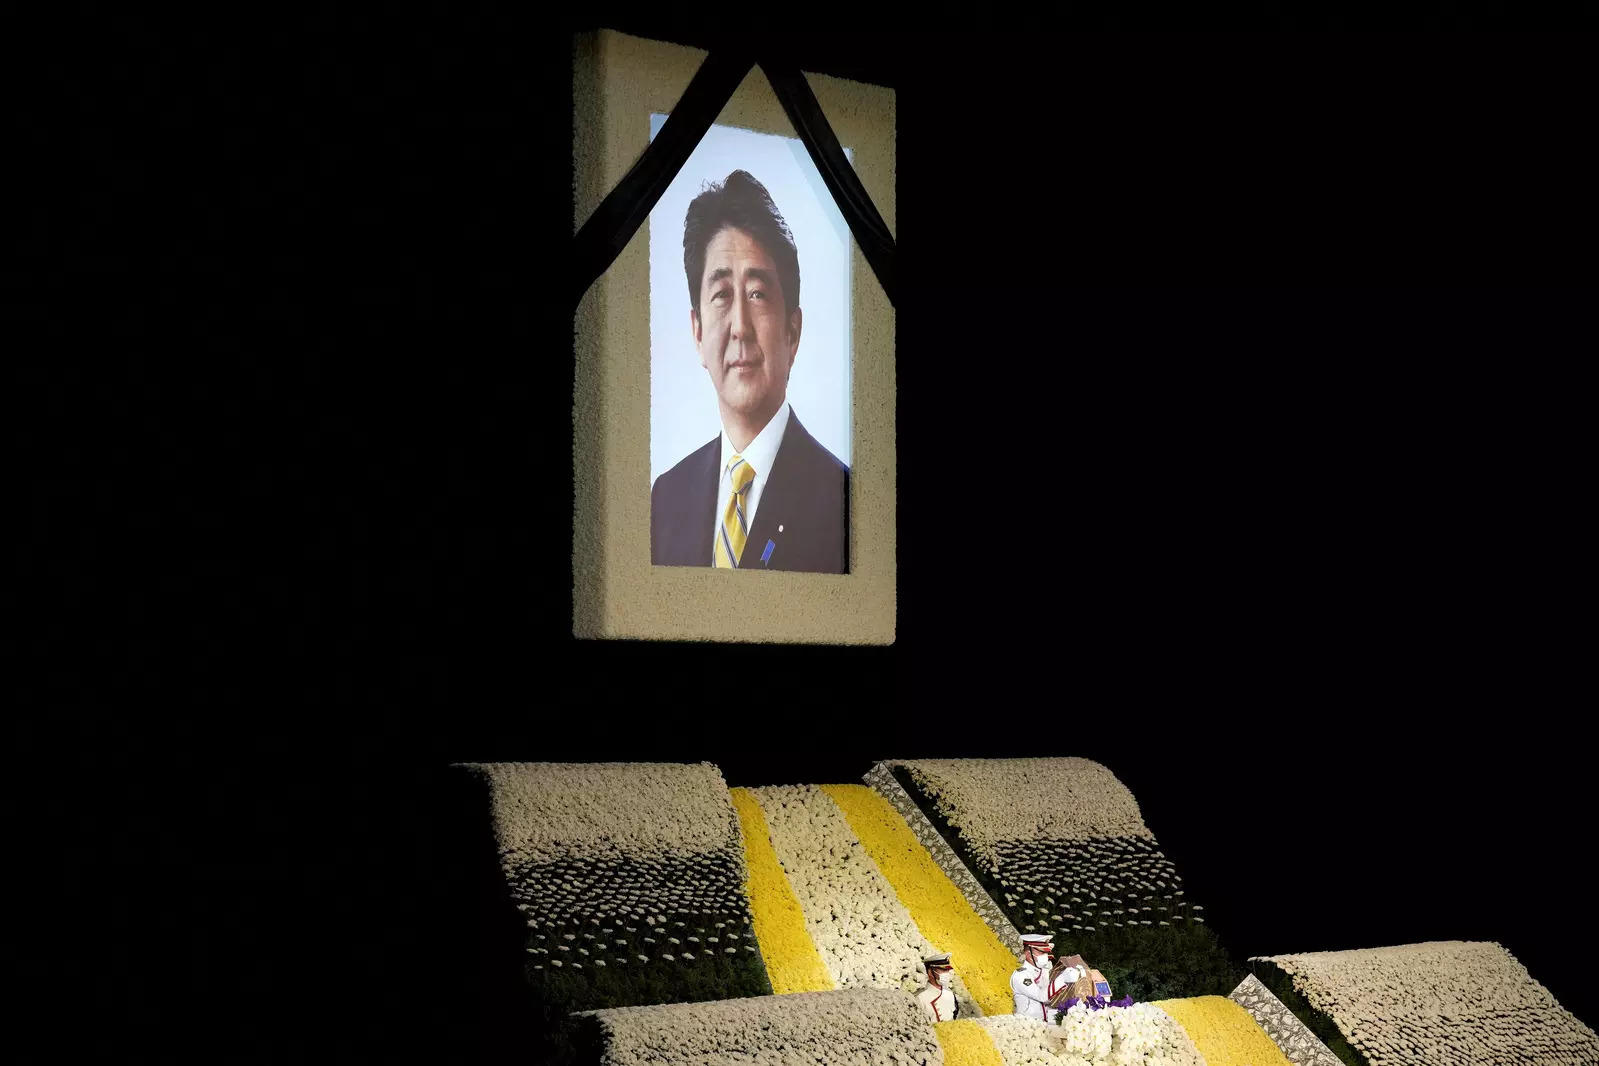 Japan prosecutors to indict suspected Shinzo Abe assassin - Kyodo